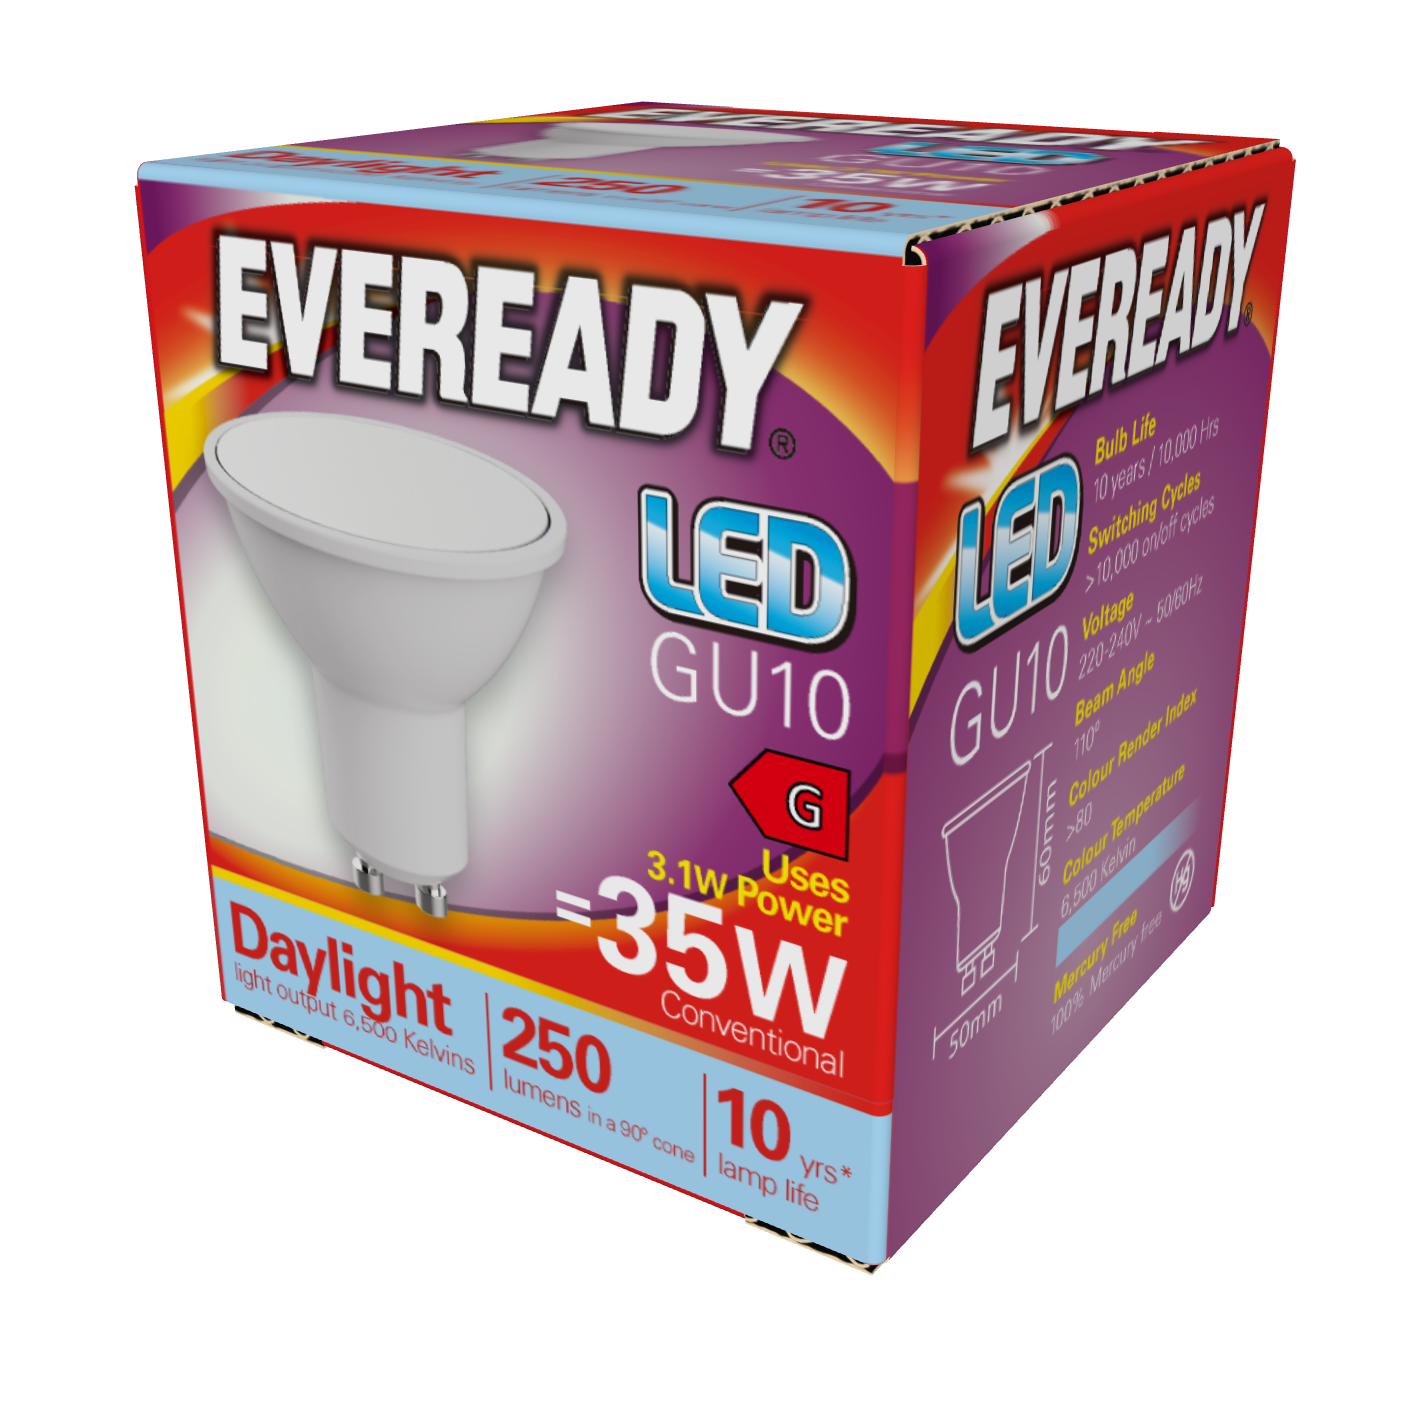 Eveready LED GU10 250lm 3.1W 6,500K (Daylight), Box of 1